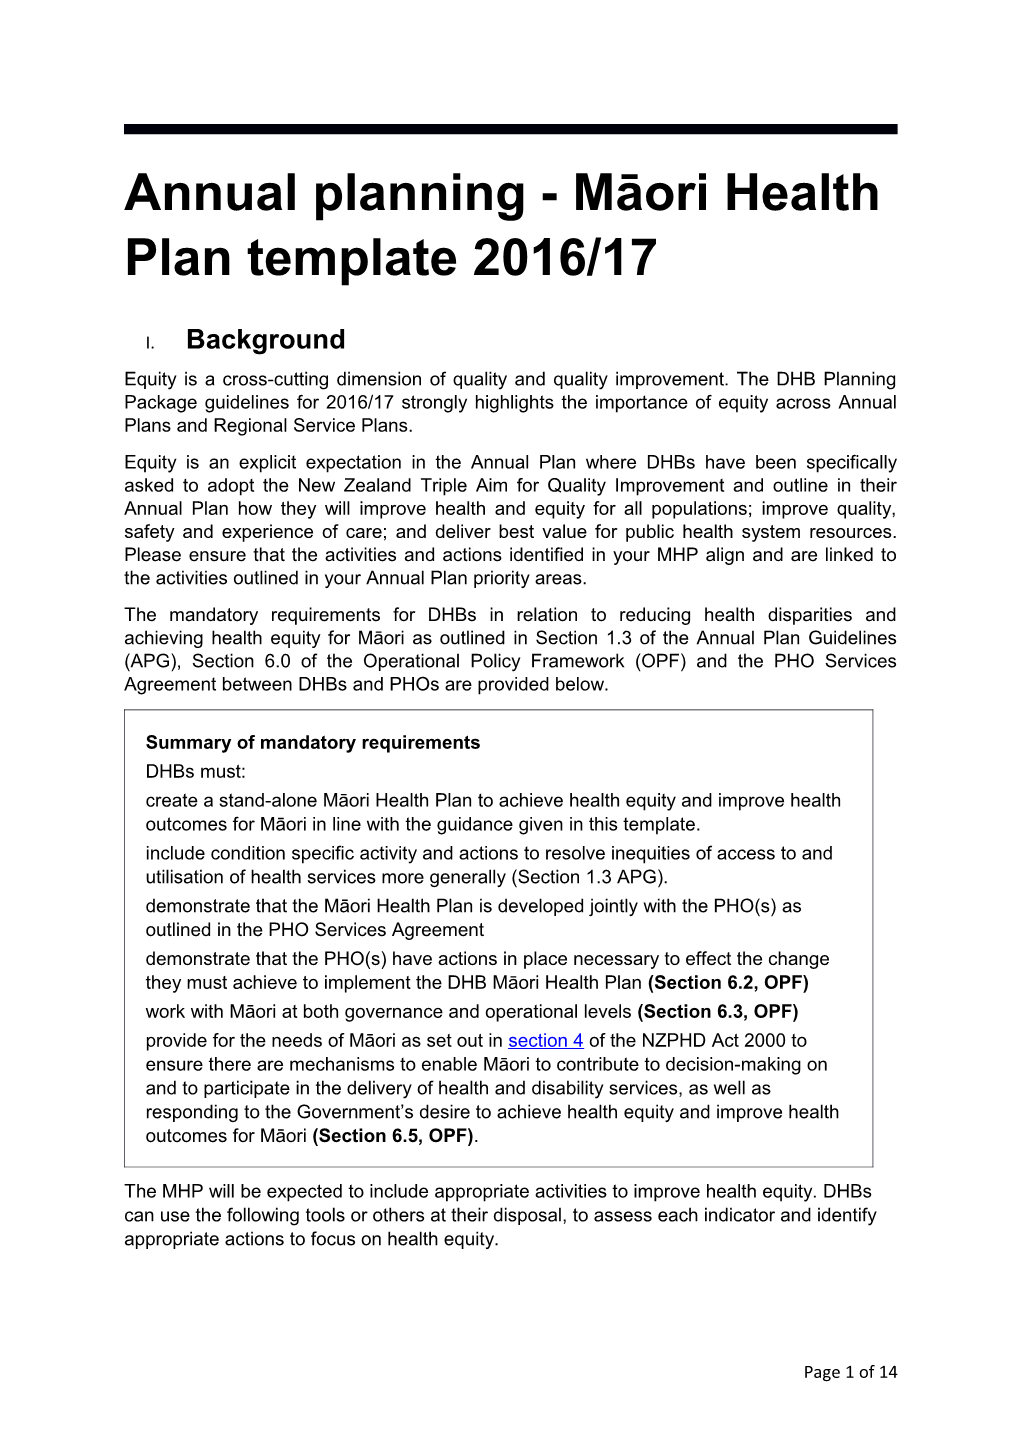 Annual Planning - Māori Health Plan Template 2016/17